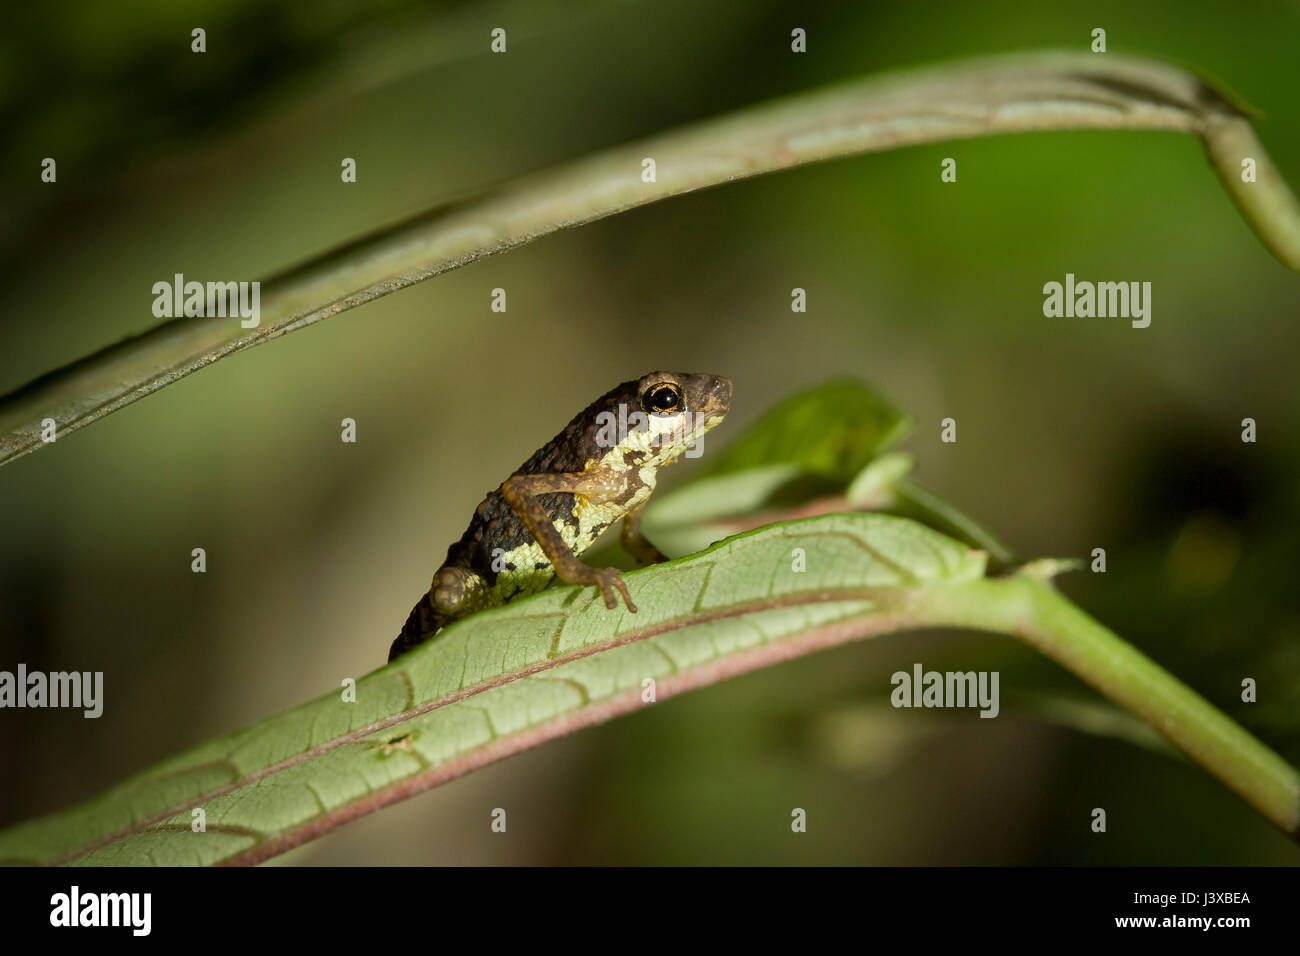 A lowland dwarf frog (Pelophryne signata) perched on a leaf. Stock Photo